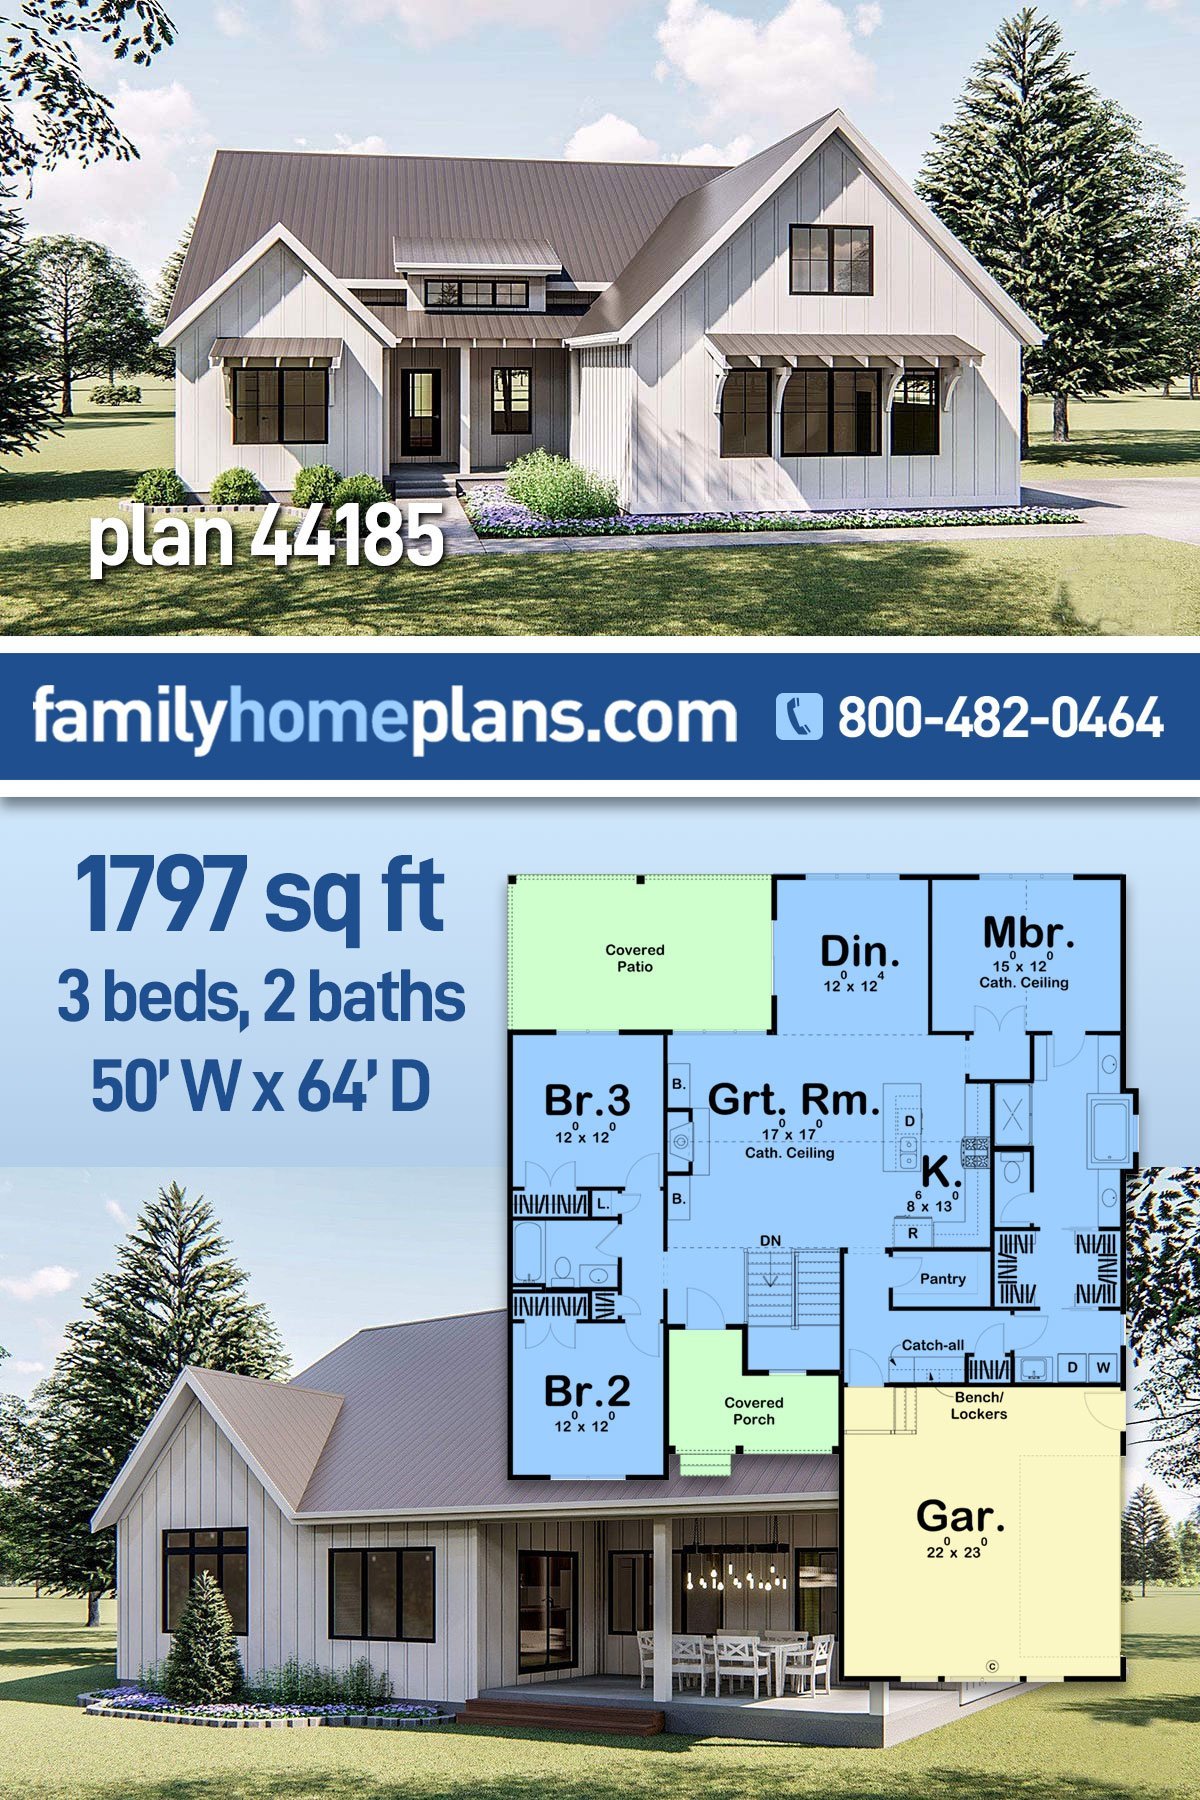 House Plan 44185